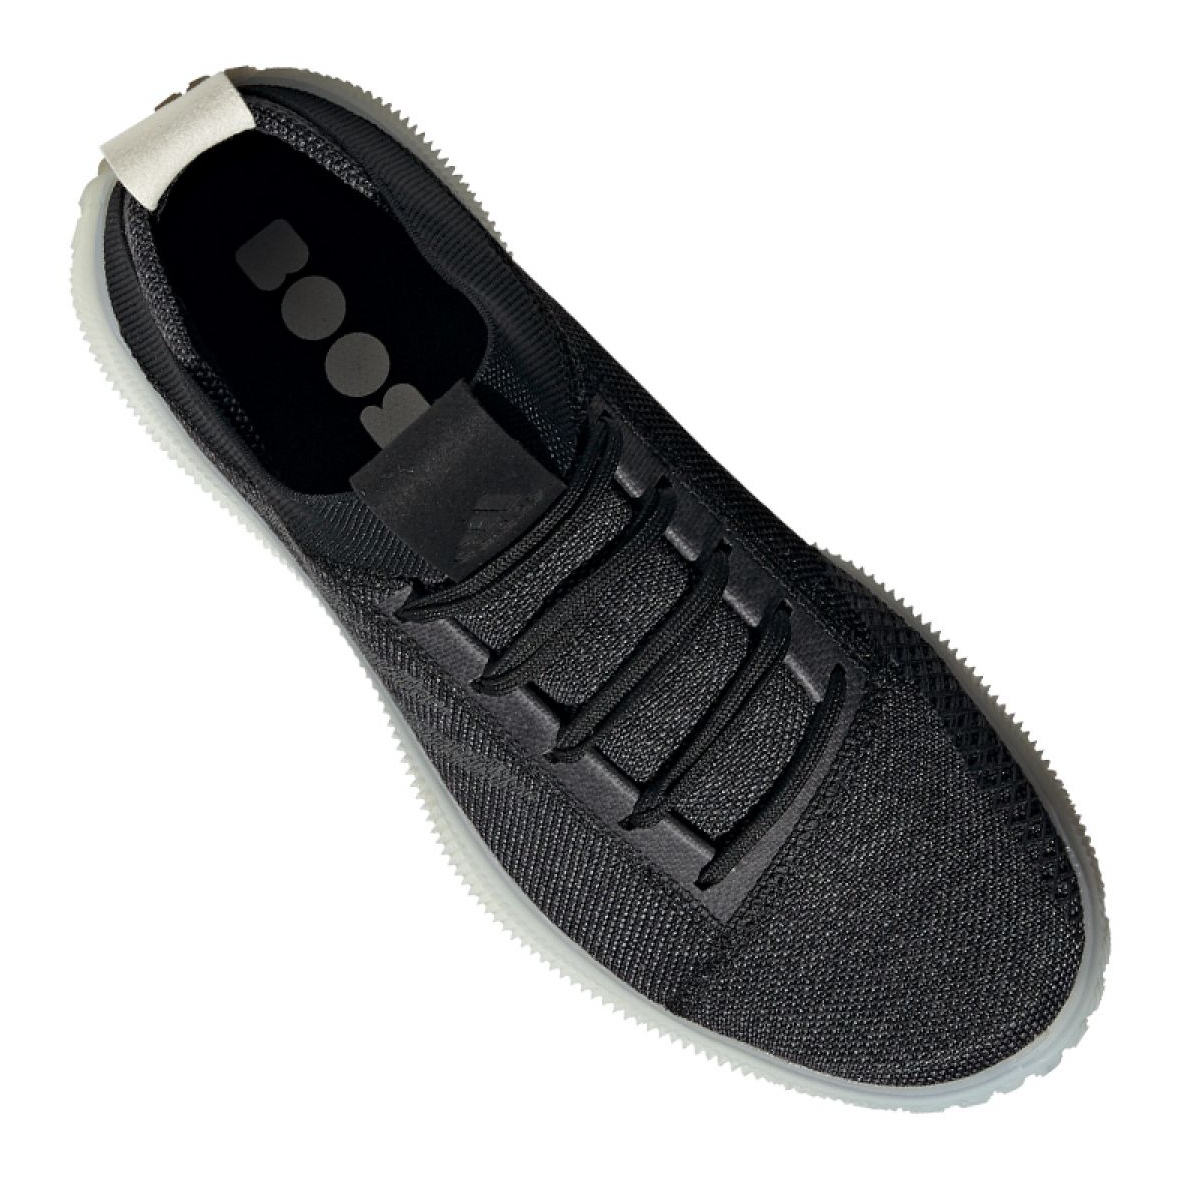 Adidas PureBOOST Trainer M DB3389 shoes 